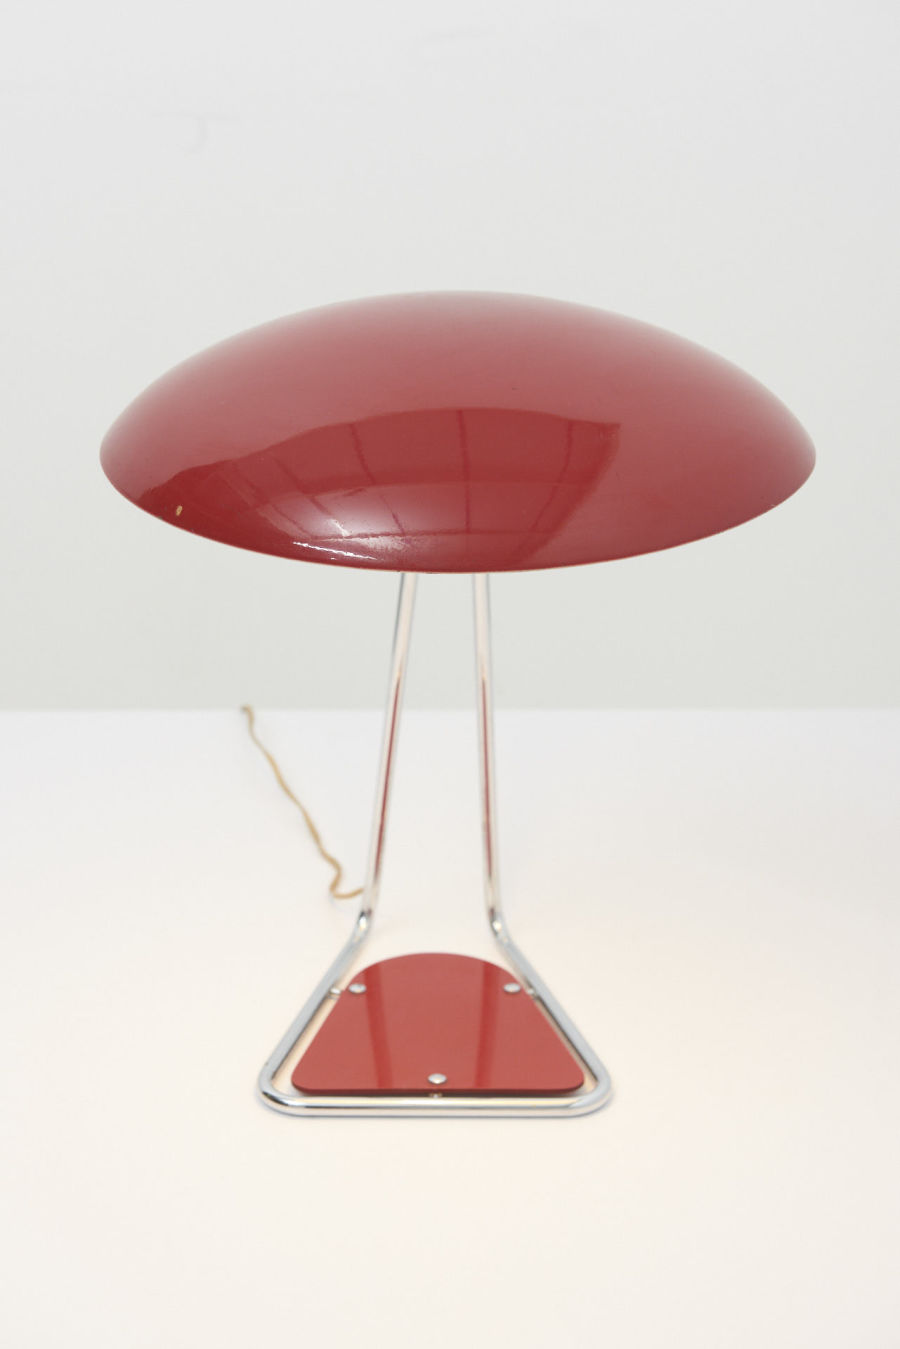 modestfurniture-vintage-2617-kaiser-table-lamp-red-shade07